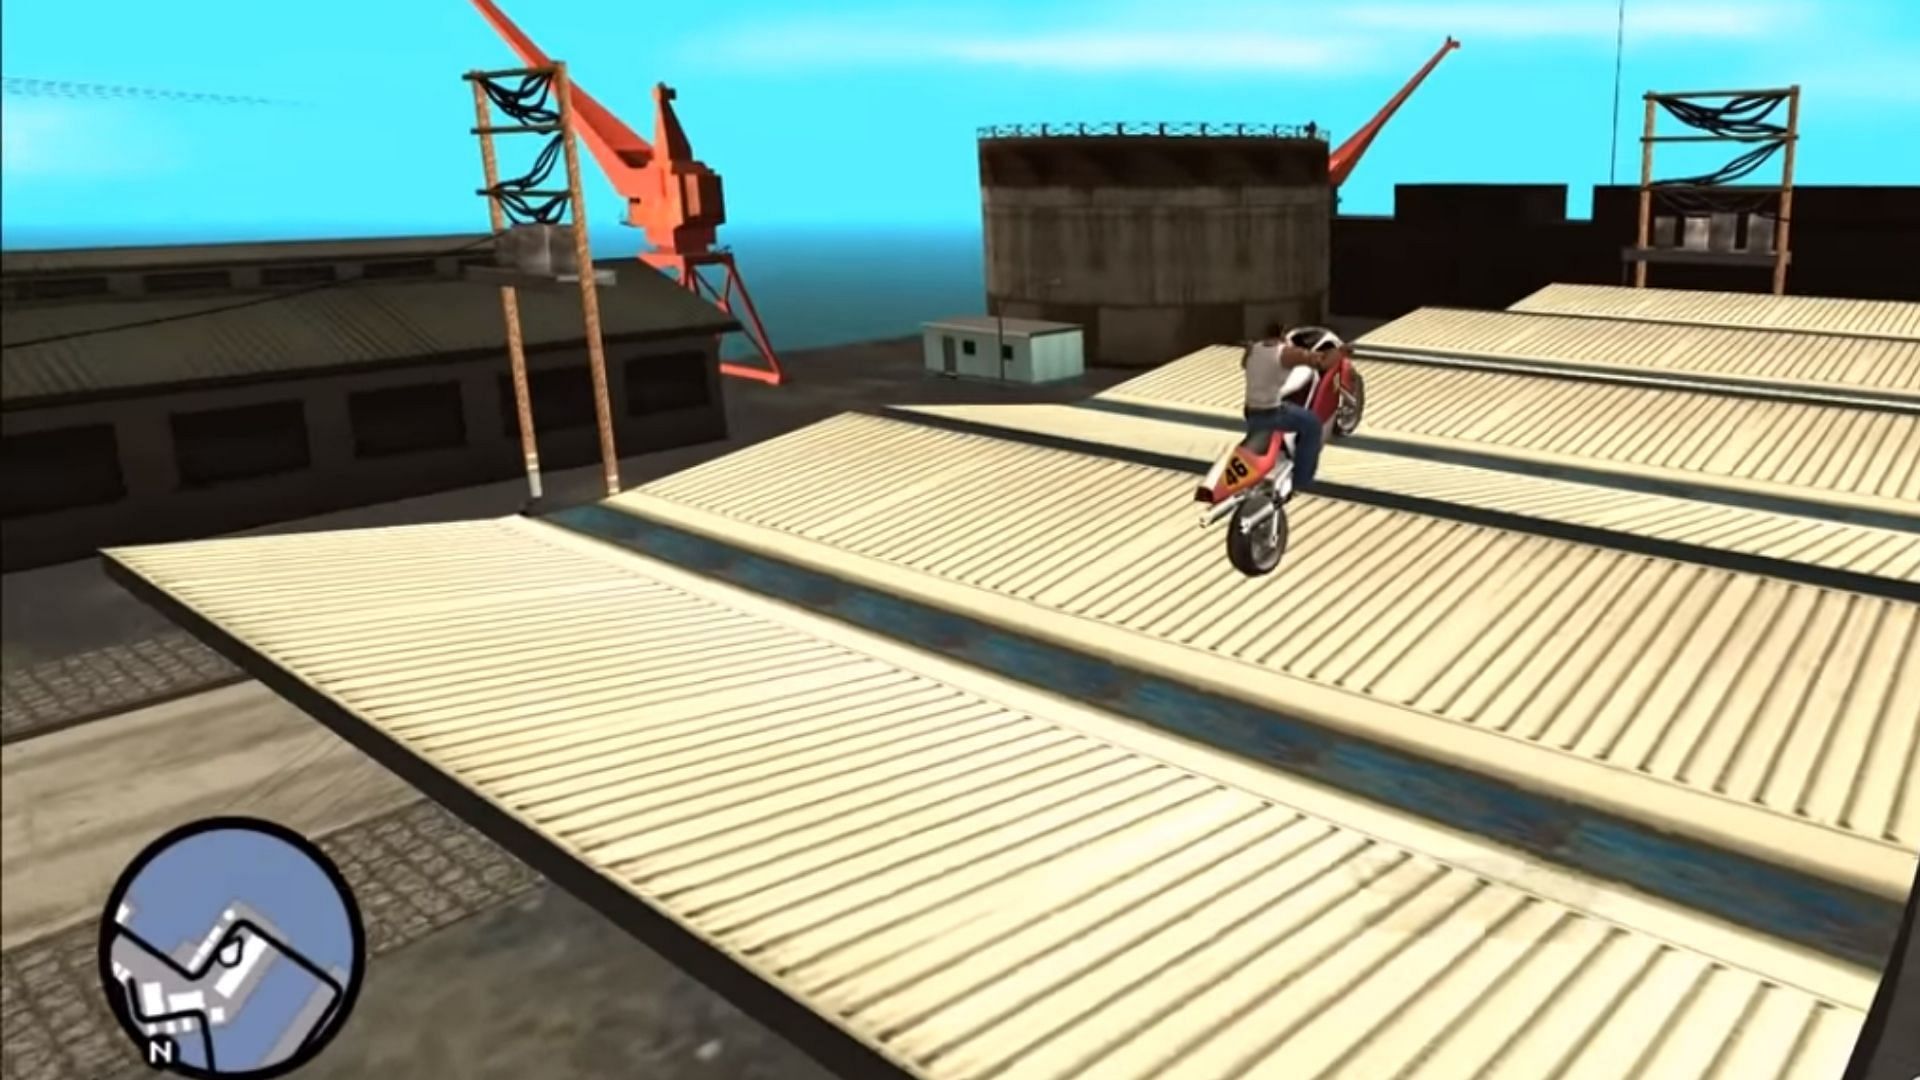 Unique stunt jumps in GTA San Andreas (Image via Rockstar Games)